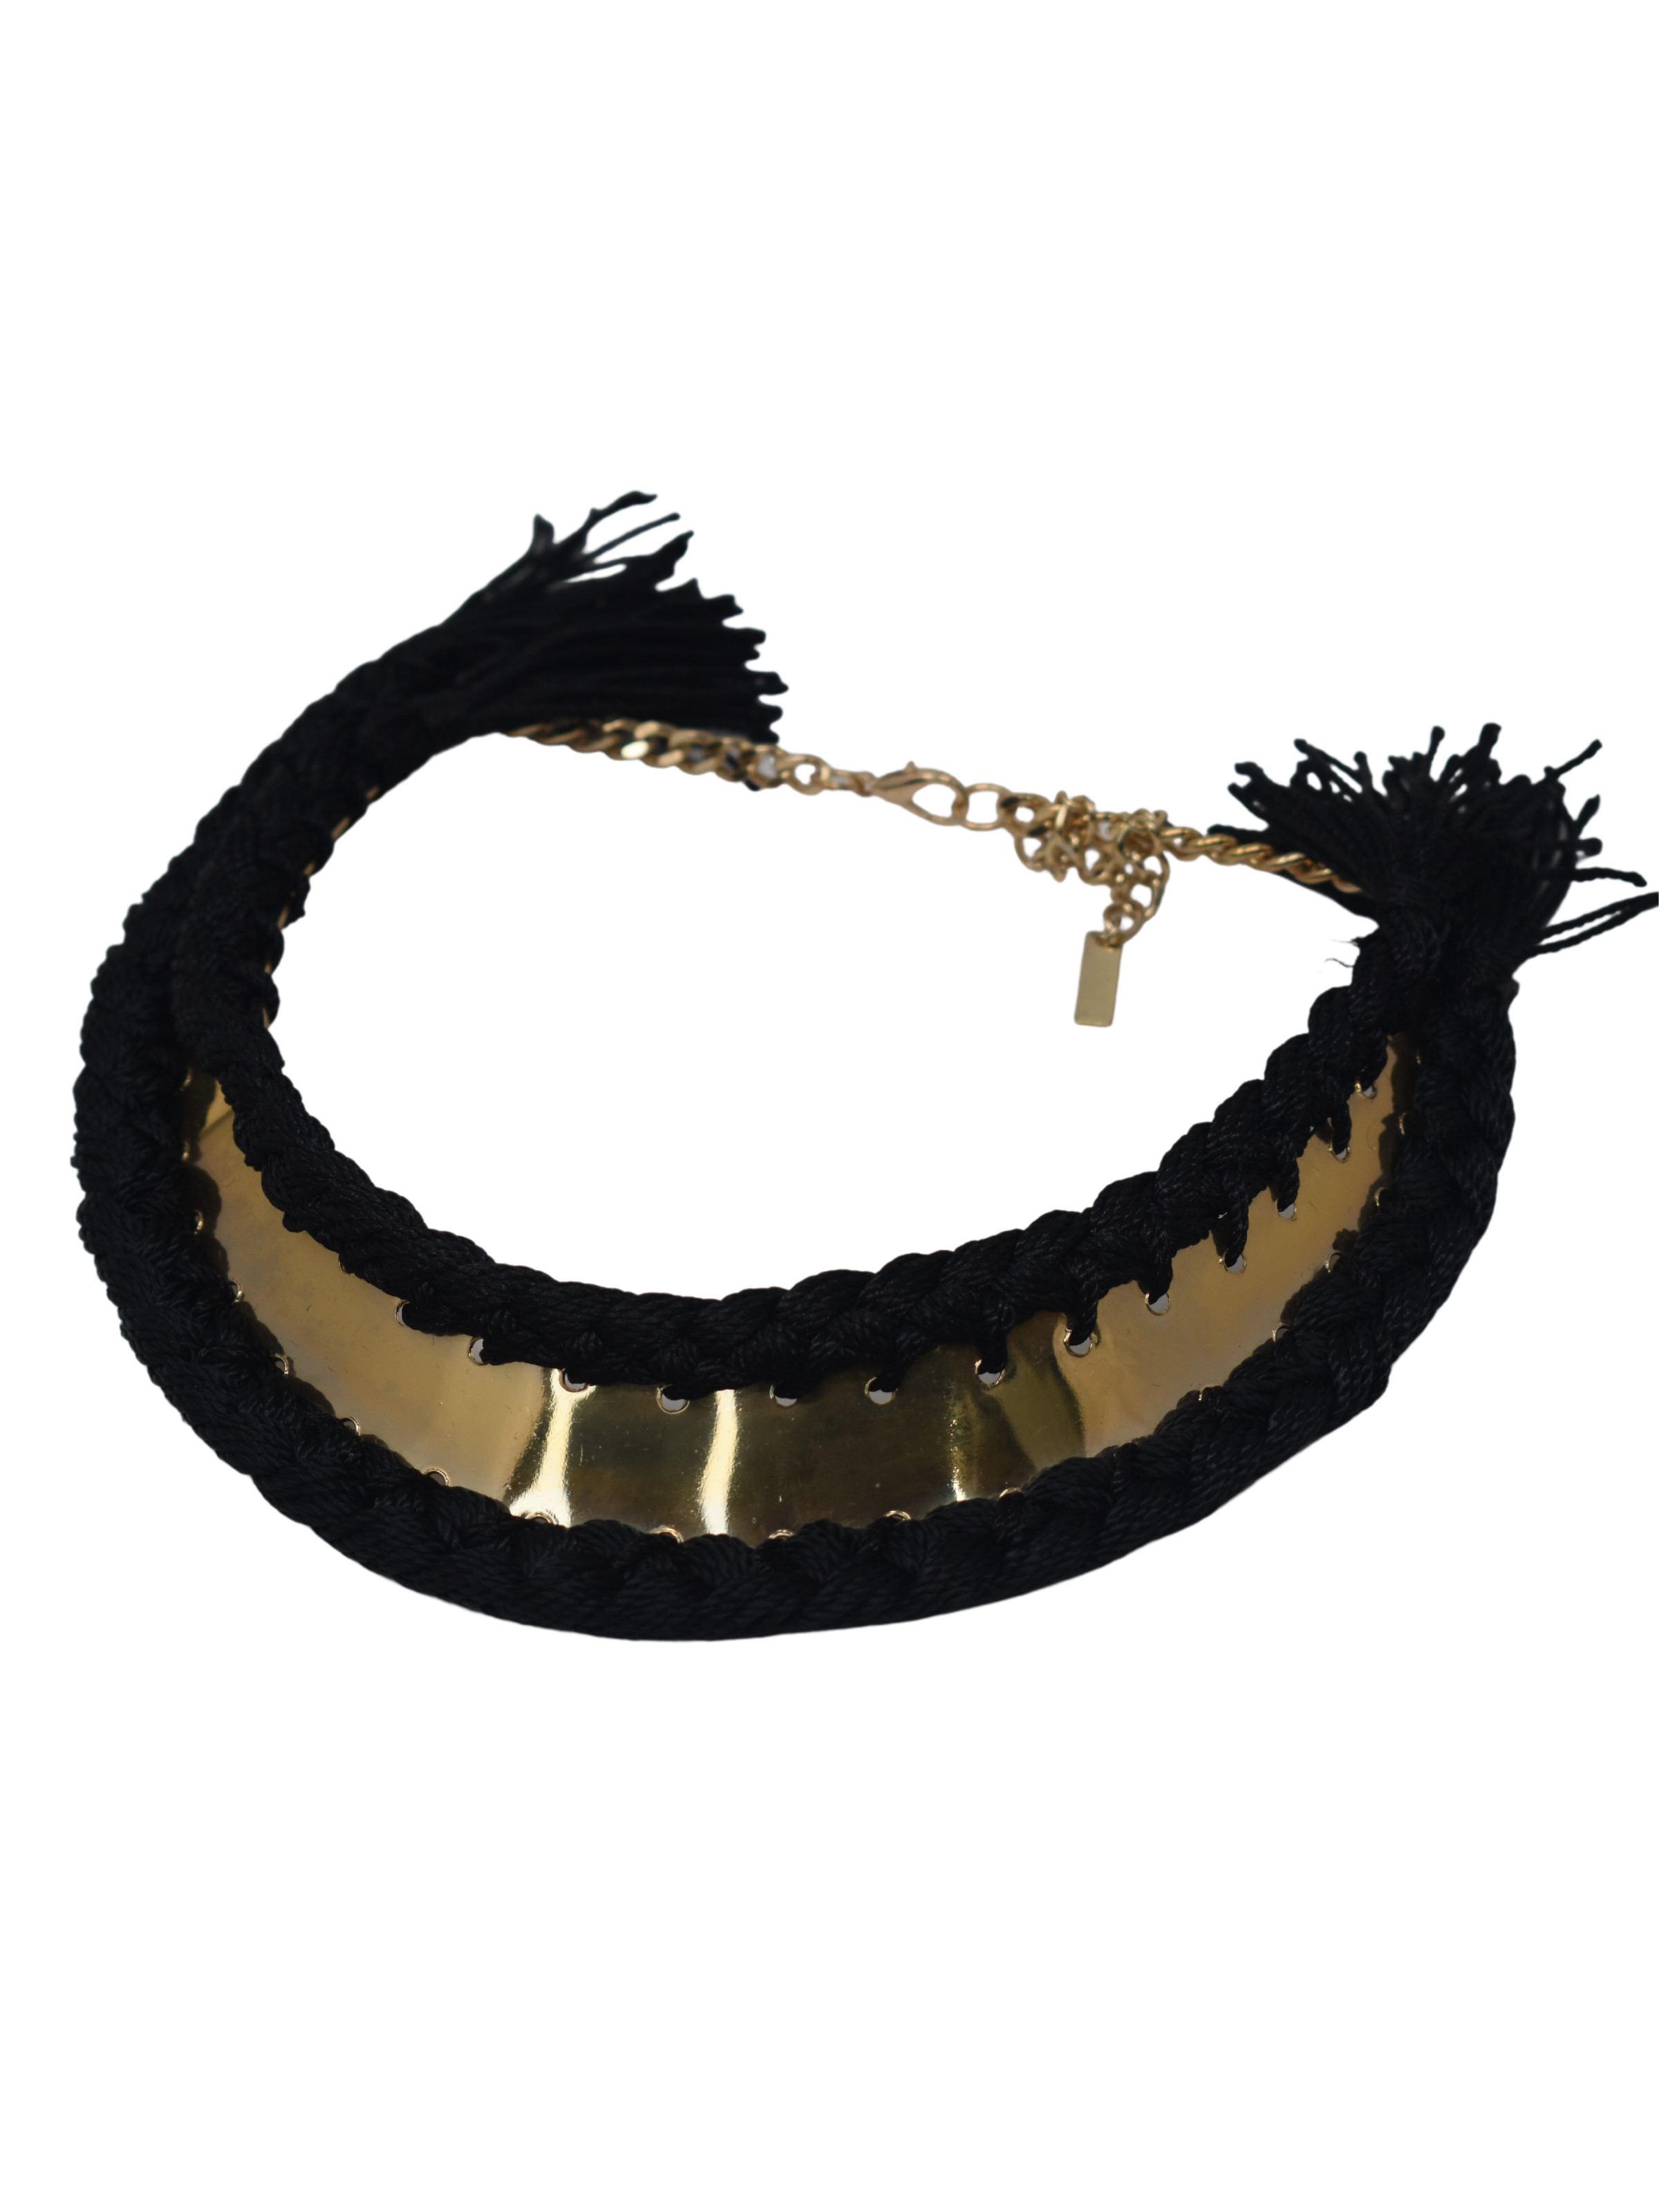 Luna Black Fringe Necklace with Gold Accents